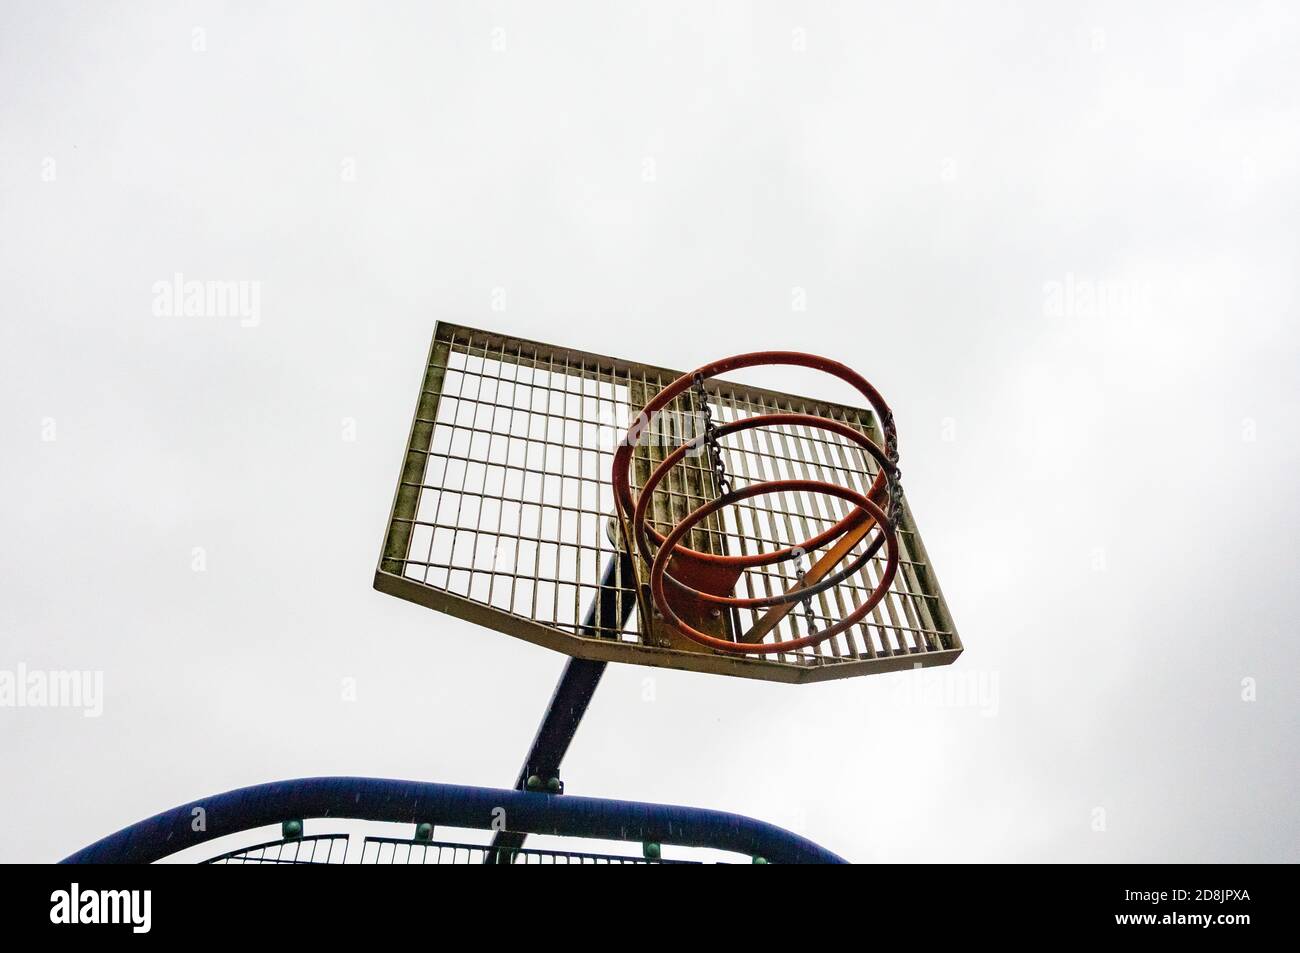 Basket ball net in a public basketball court Stock Photo